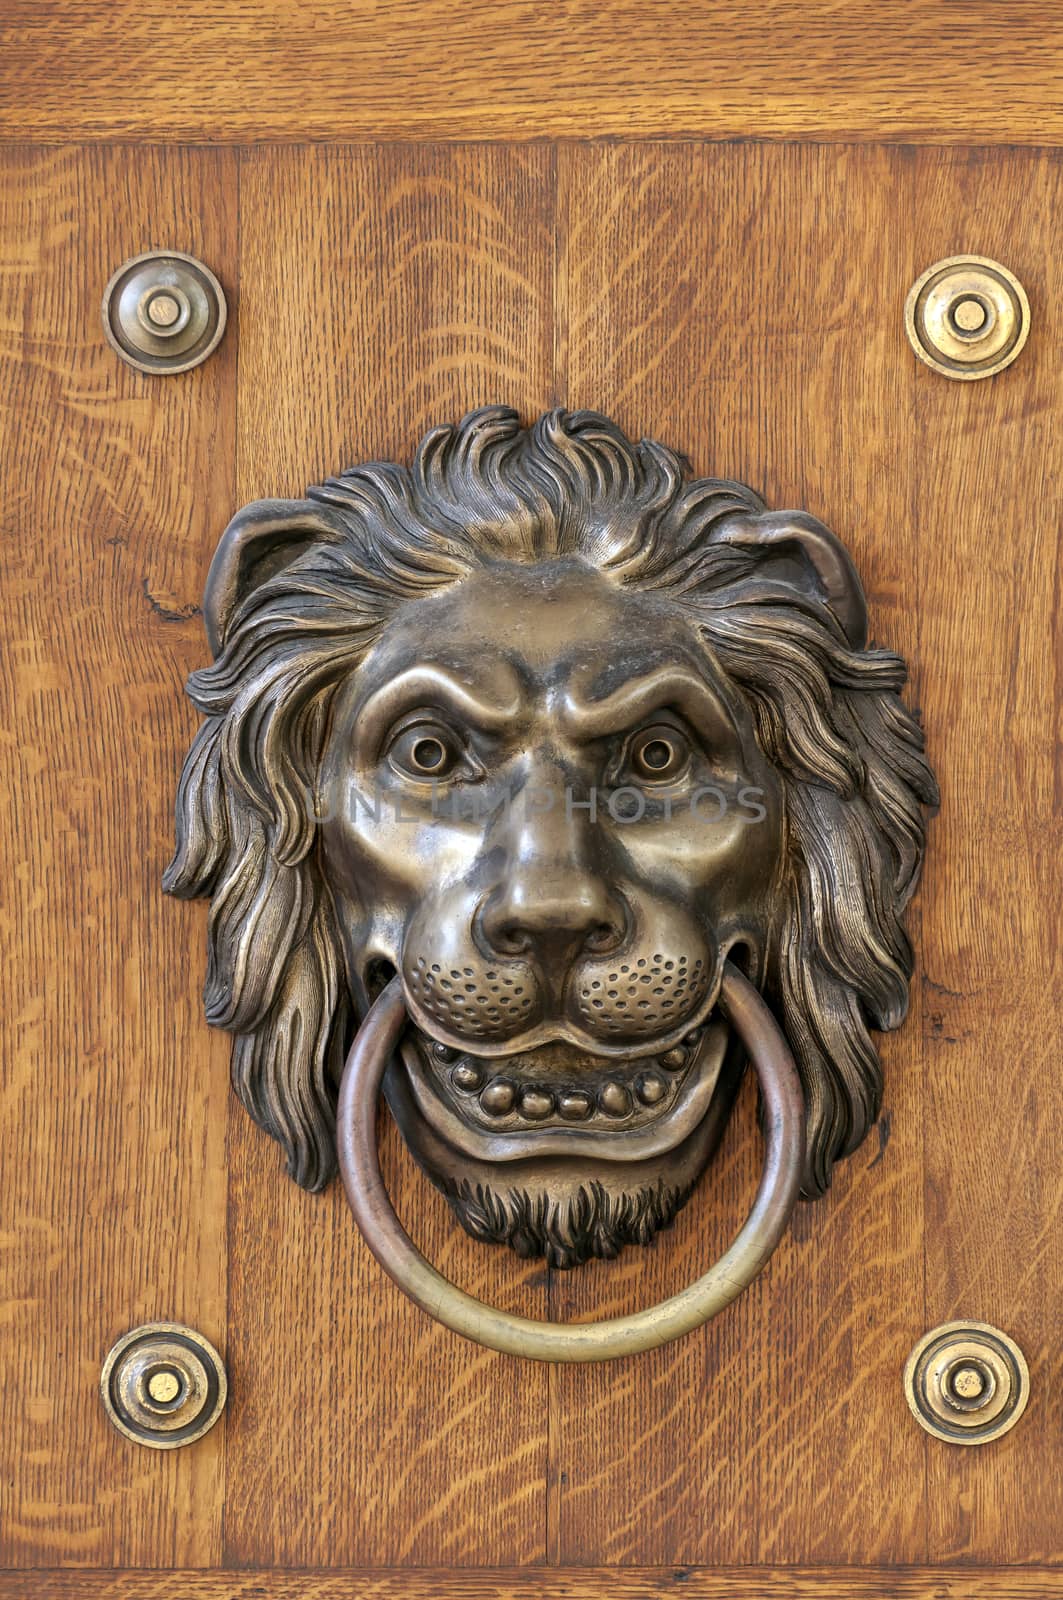 Close up view of a lion's head door knocker.